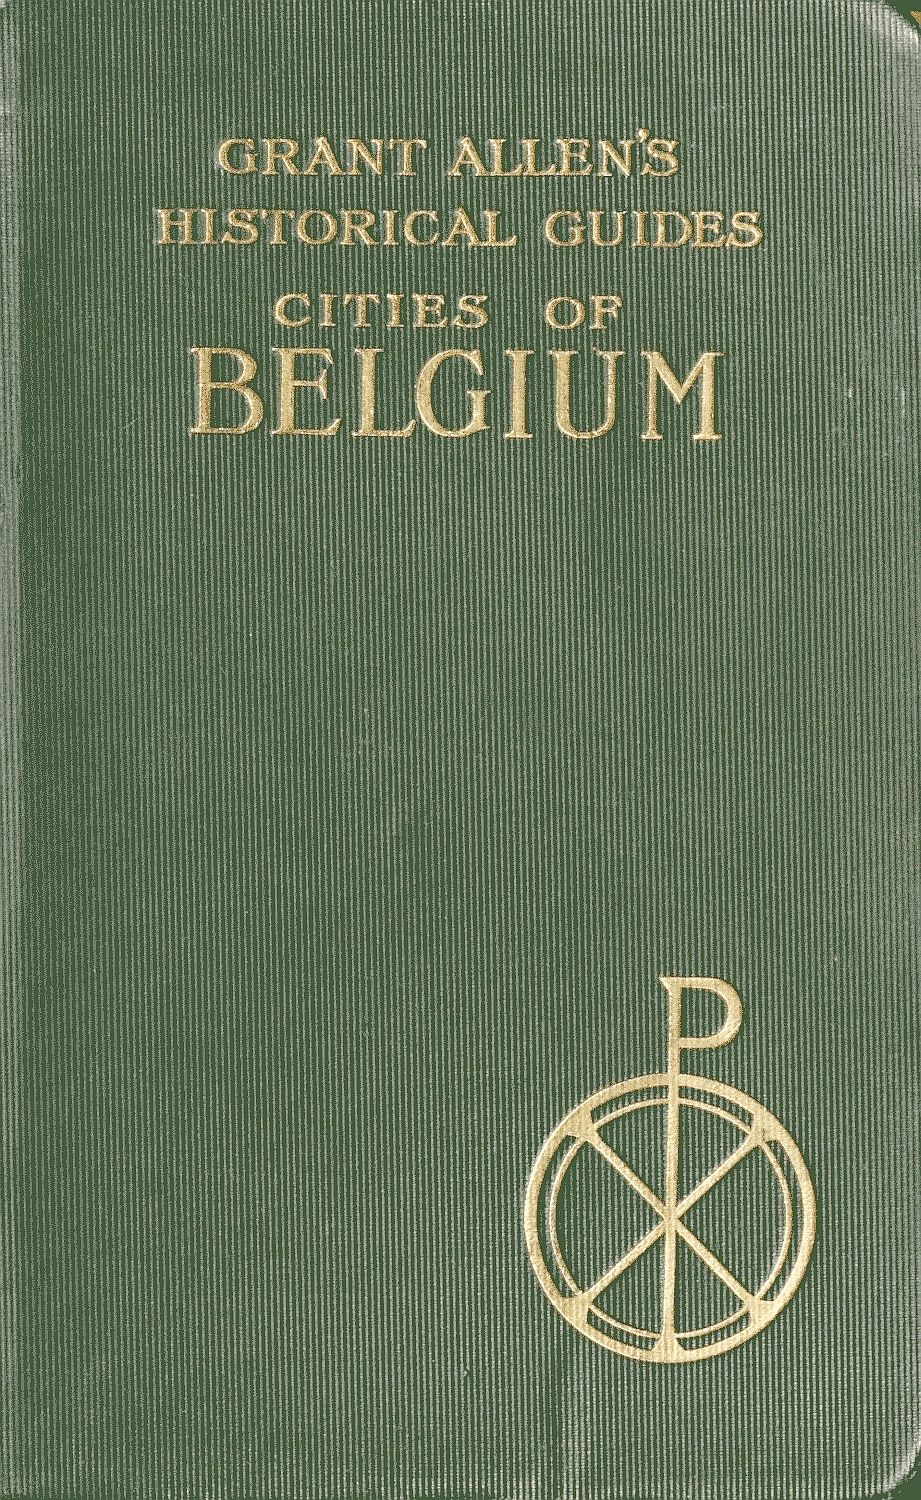 Cities of Belgium&#10;Grant Allen's Historical Guides